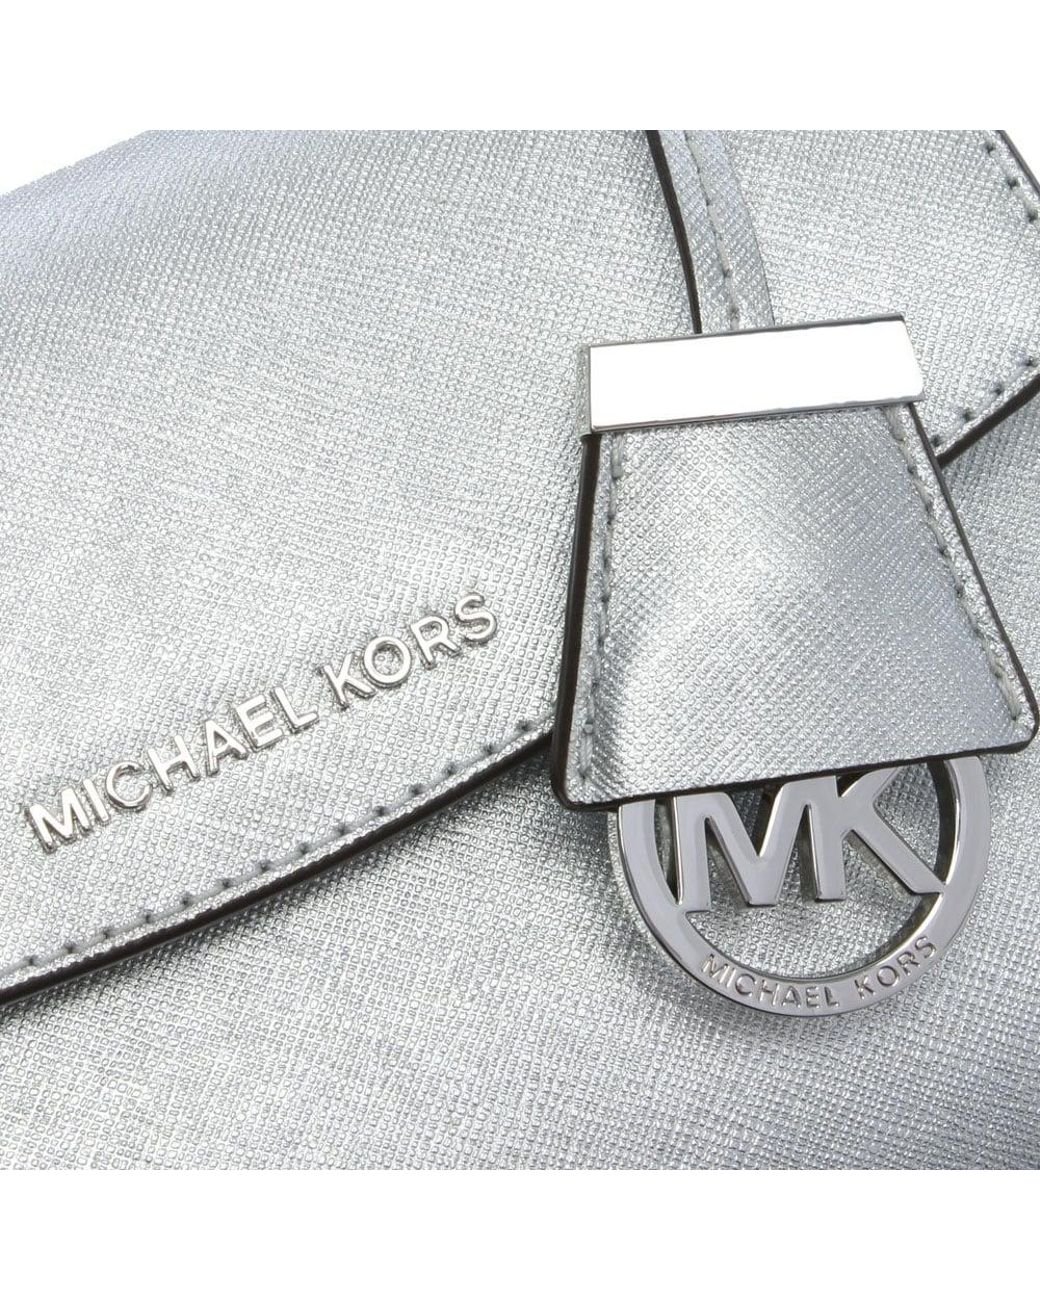 Michael Michael Kors Ava Extra Small Metallic Jewel Crossbody In Silver